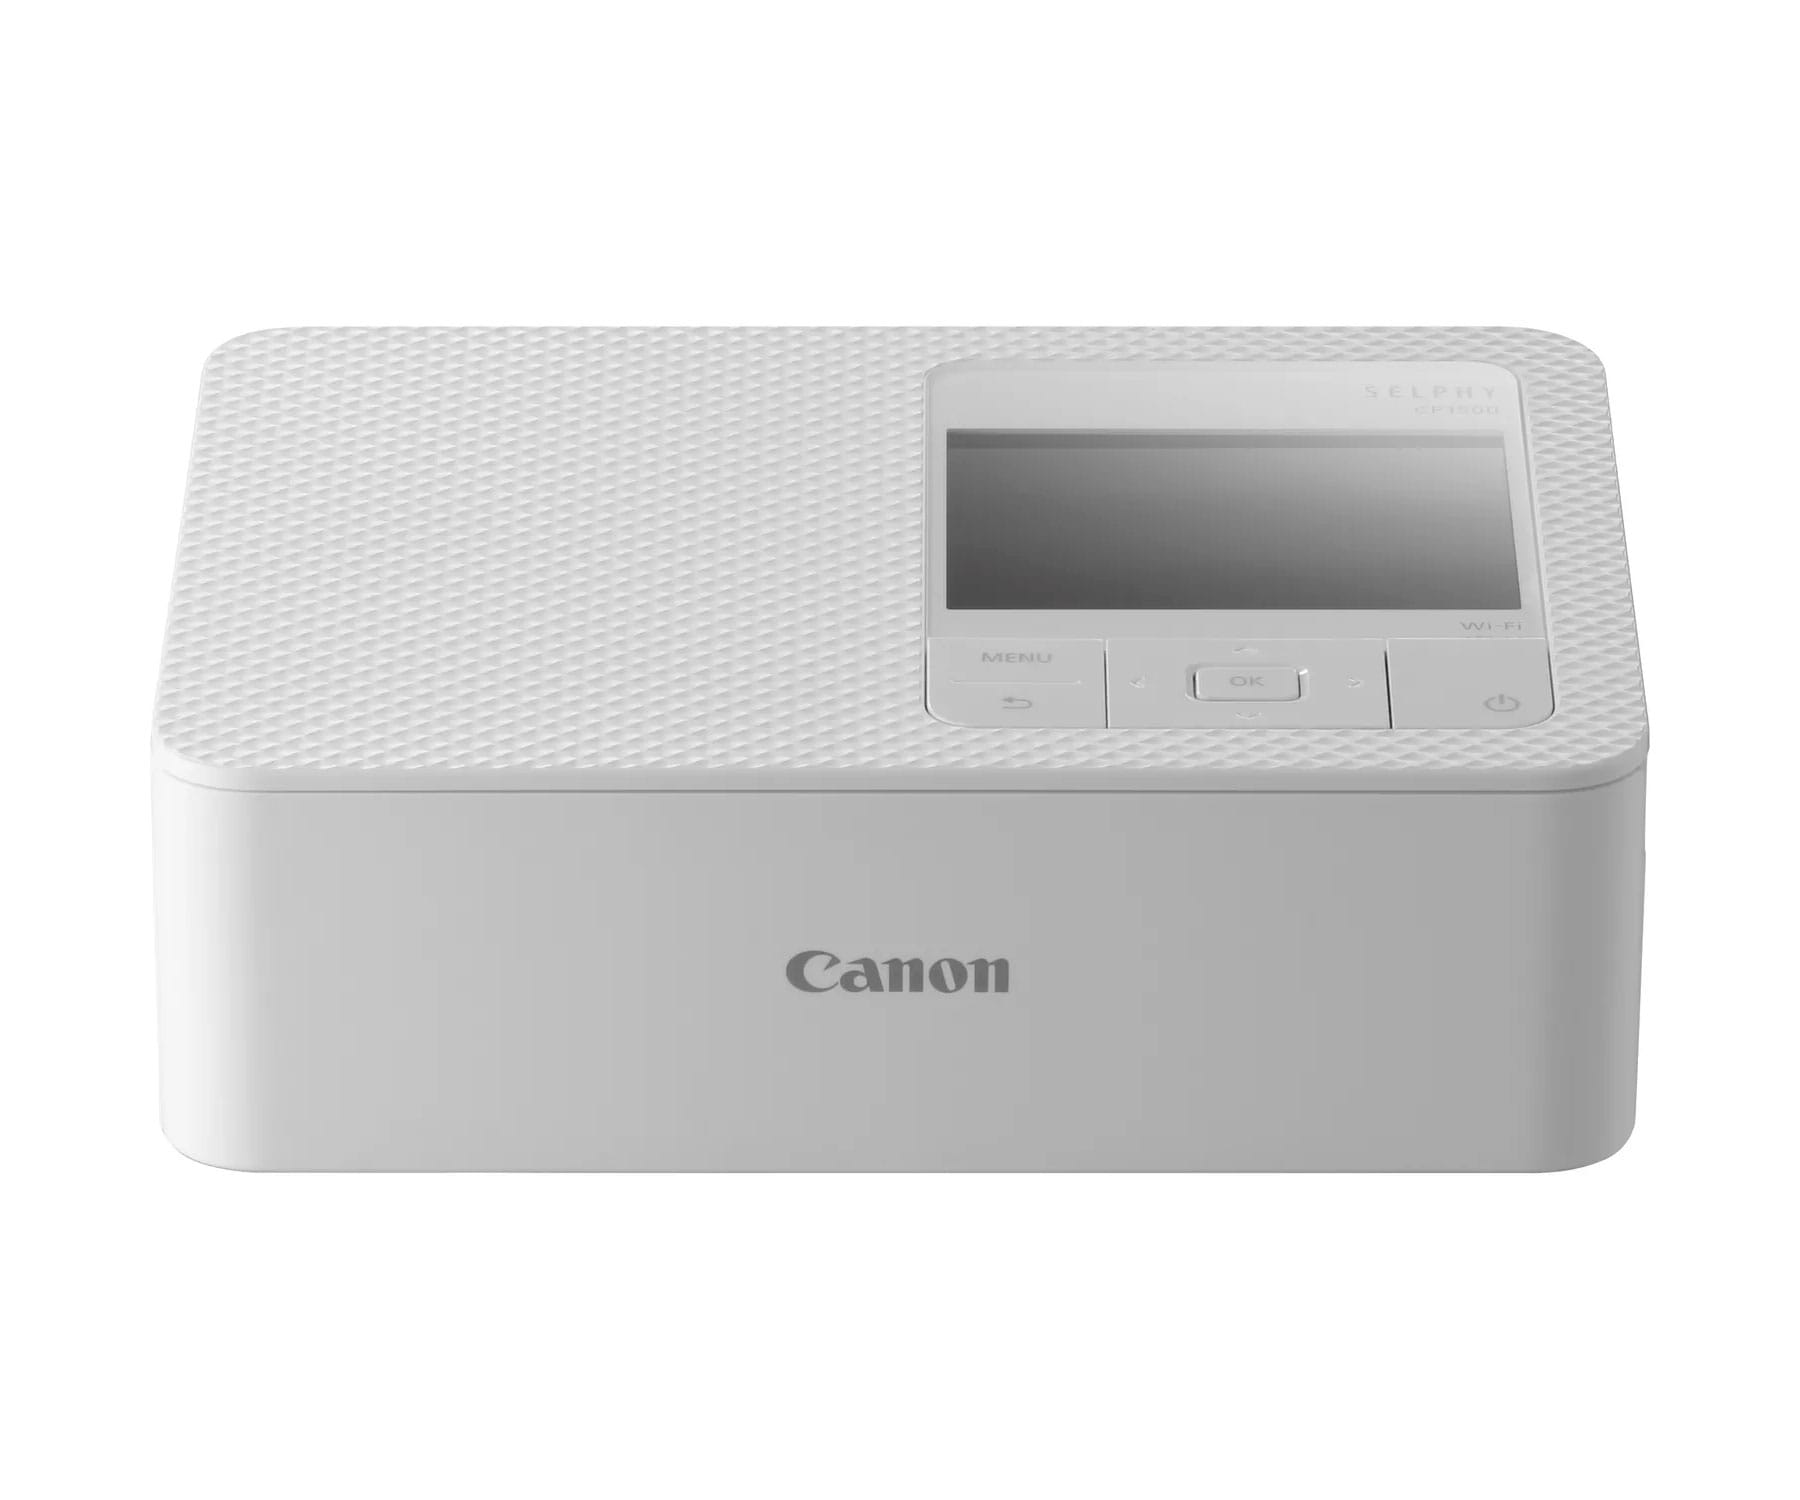 Canon Selphy CP1500 White / Impresora fotográfica portátil